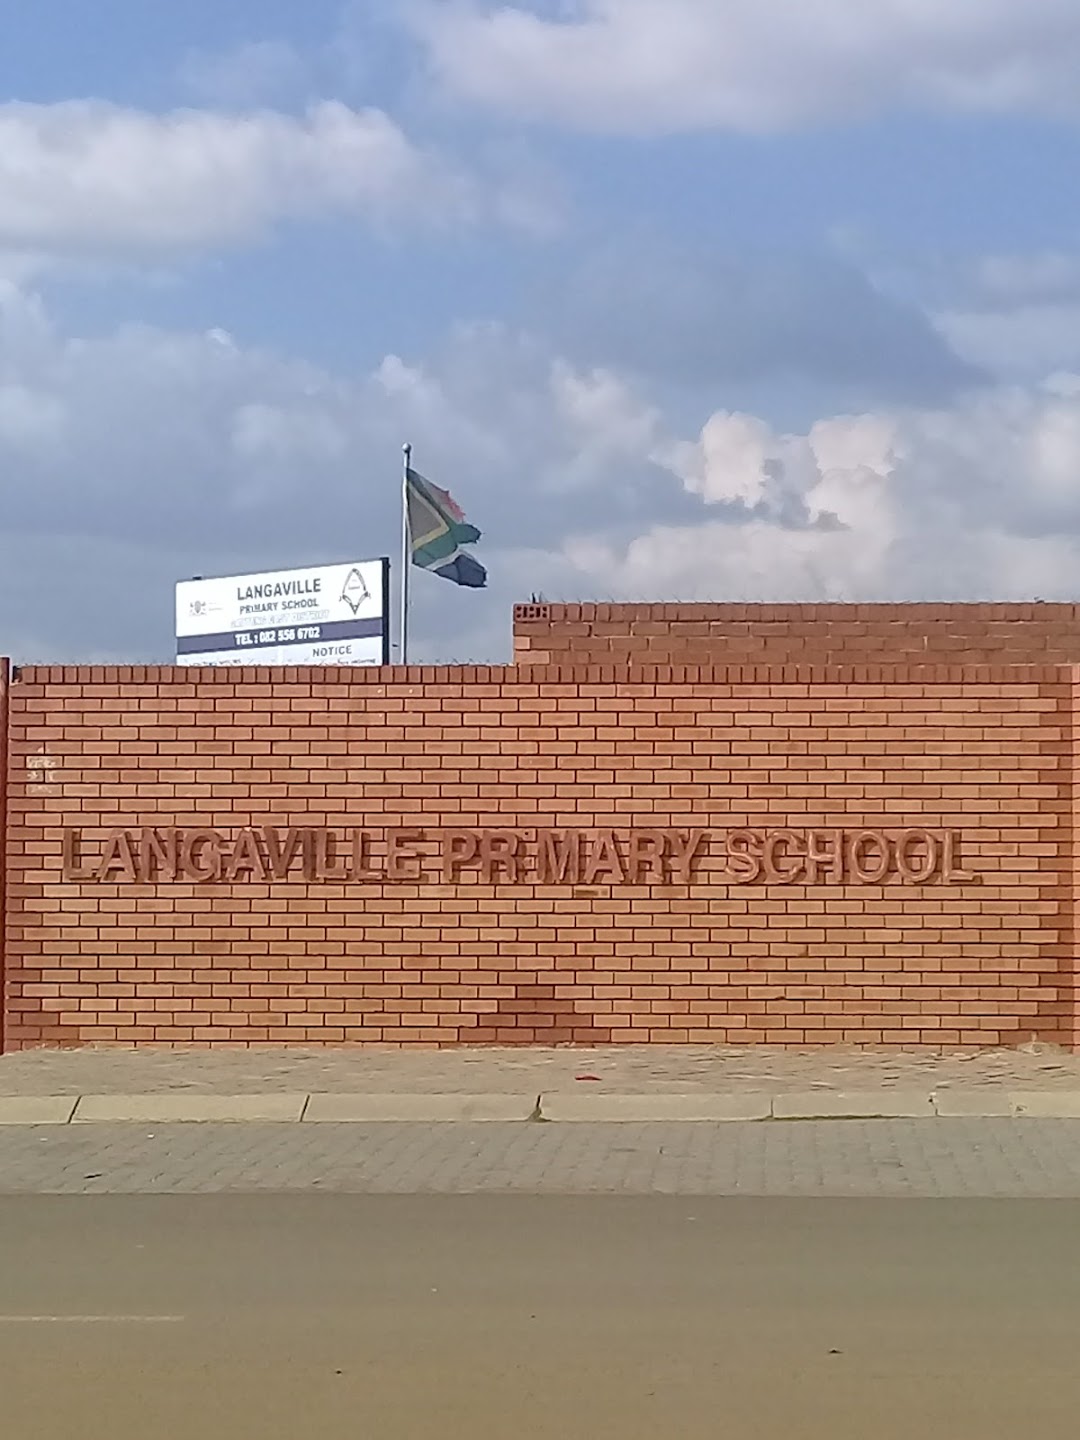 Langaville Primary School